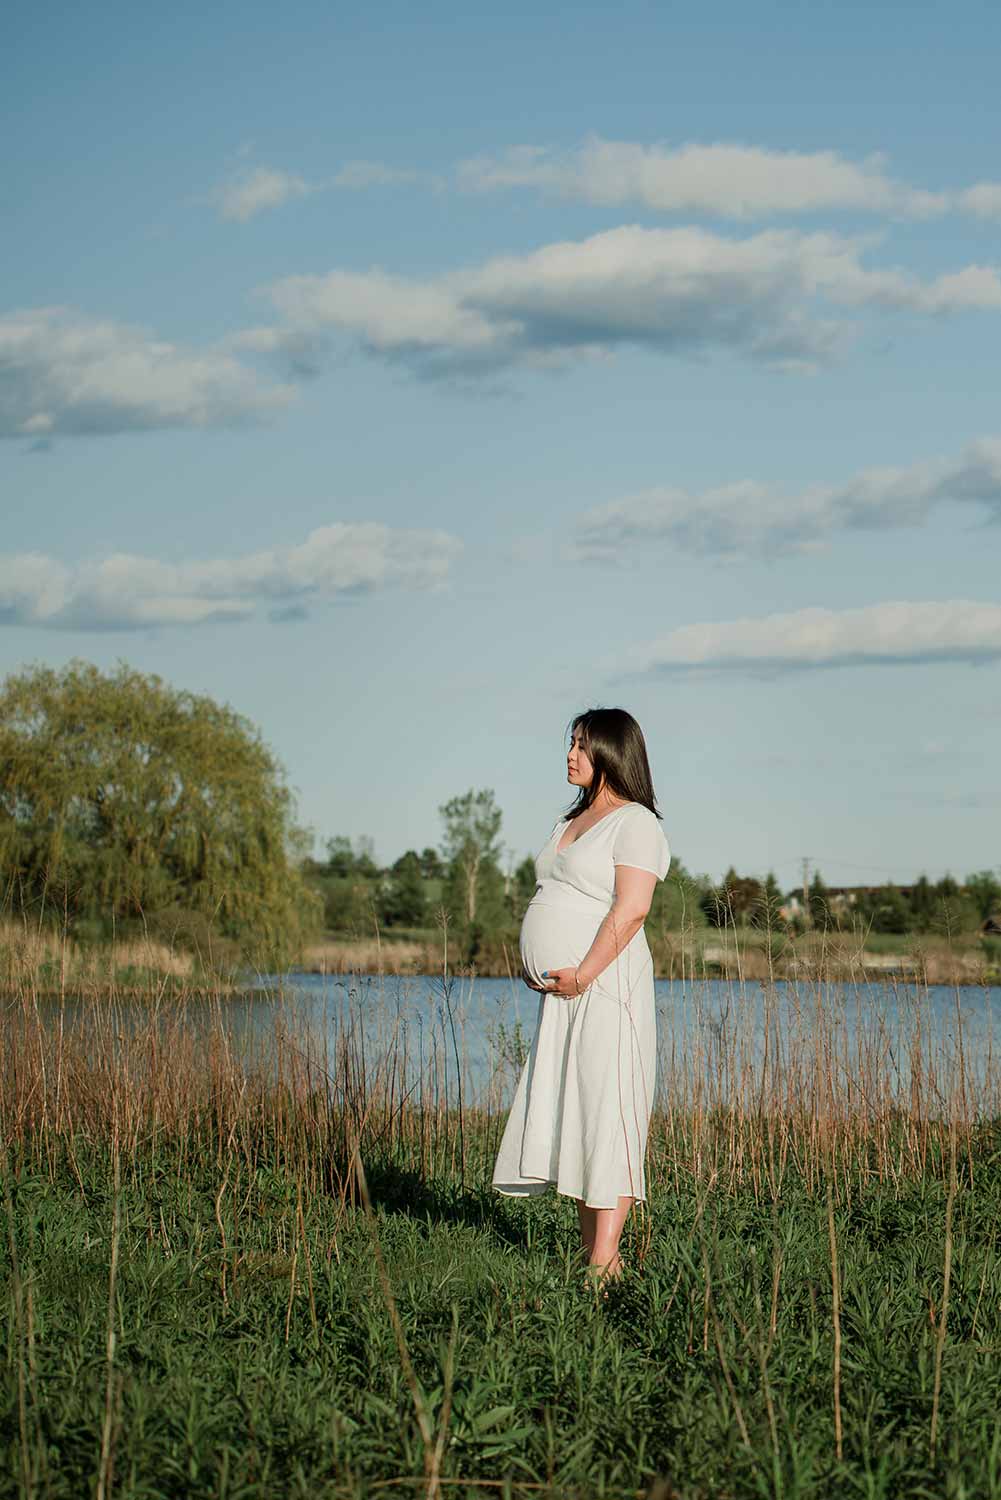 Anna TX Maternity Photographer | Christina Freeman Photography